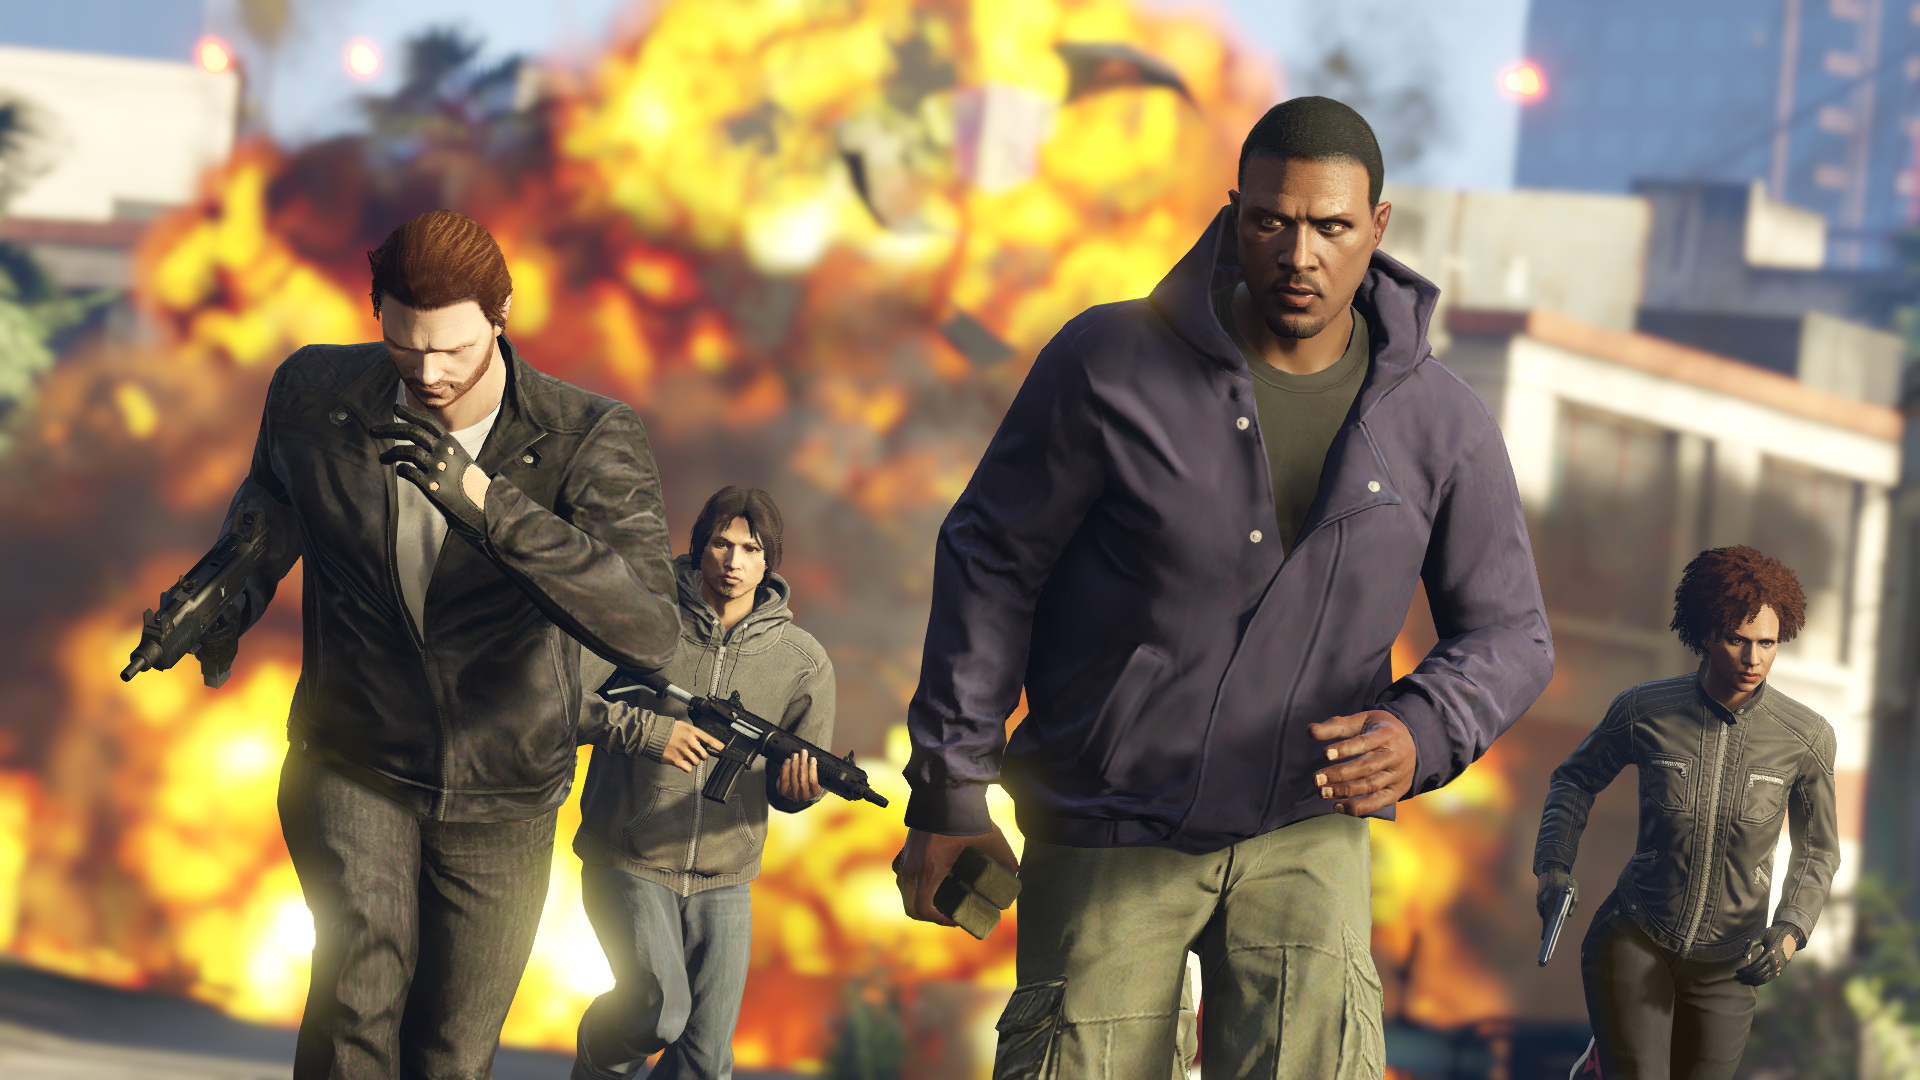 GTAV Updates: Online Heists Coming March 10, GTAV for PC Coming April 14 -  Rockstar Games